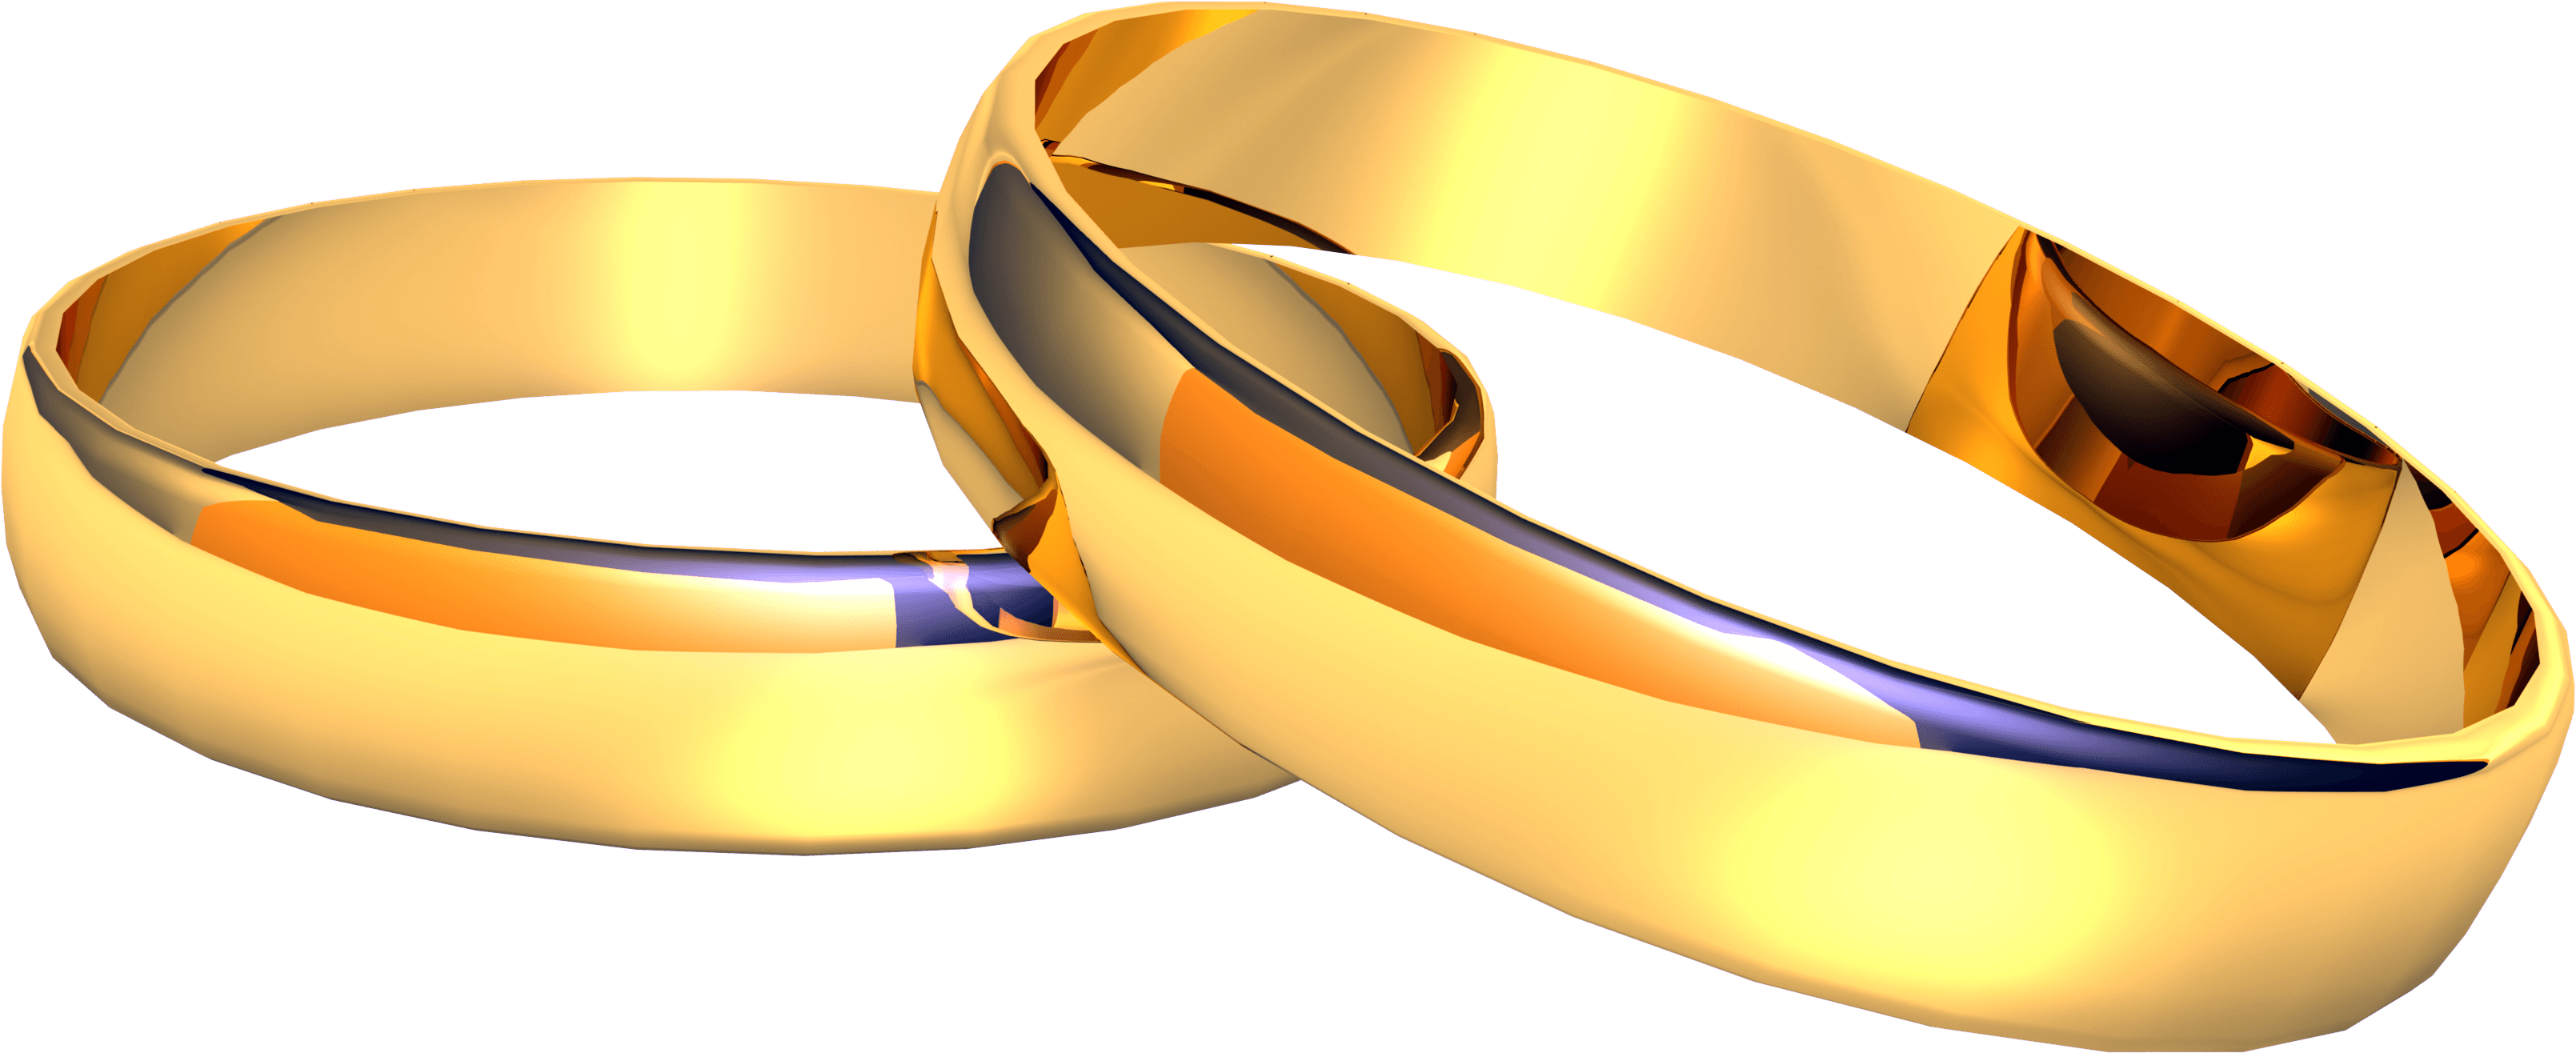 Wedding Golden Rings Png Image PNG Image